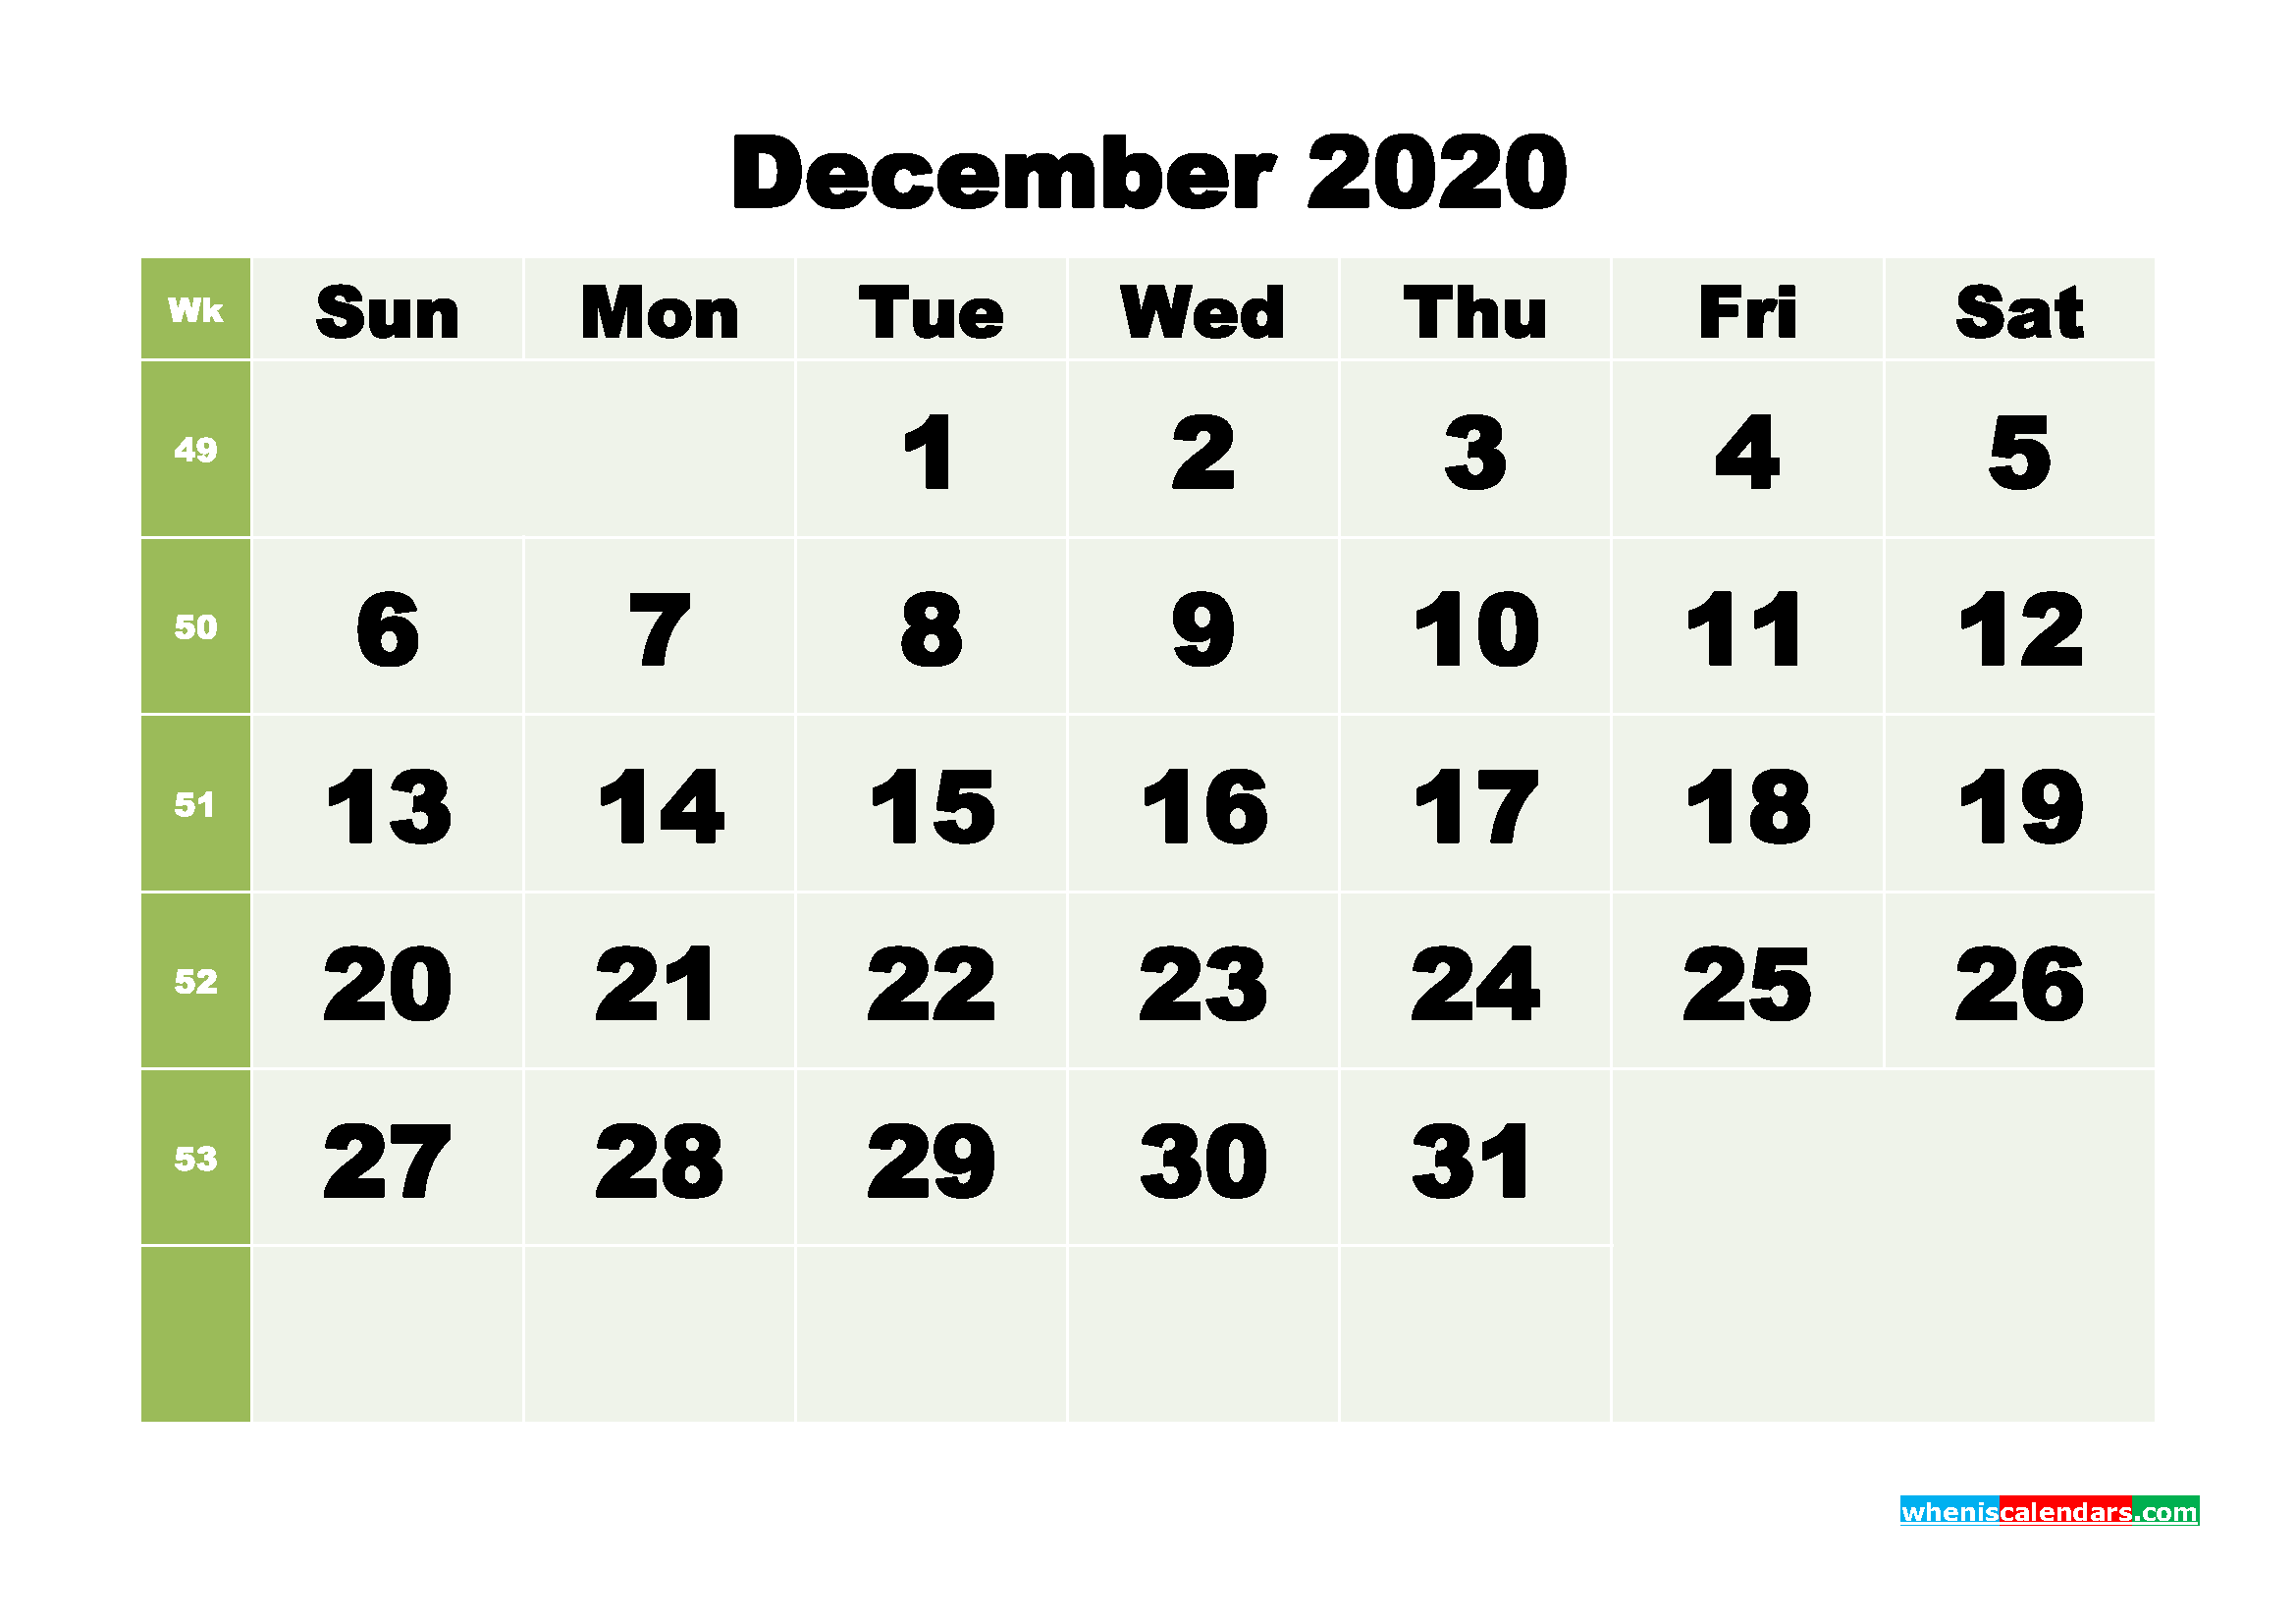 December 2020 Monthly Calendar Template Word